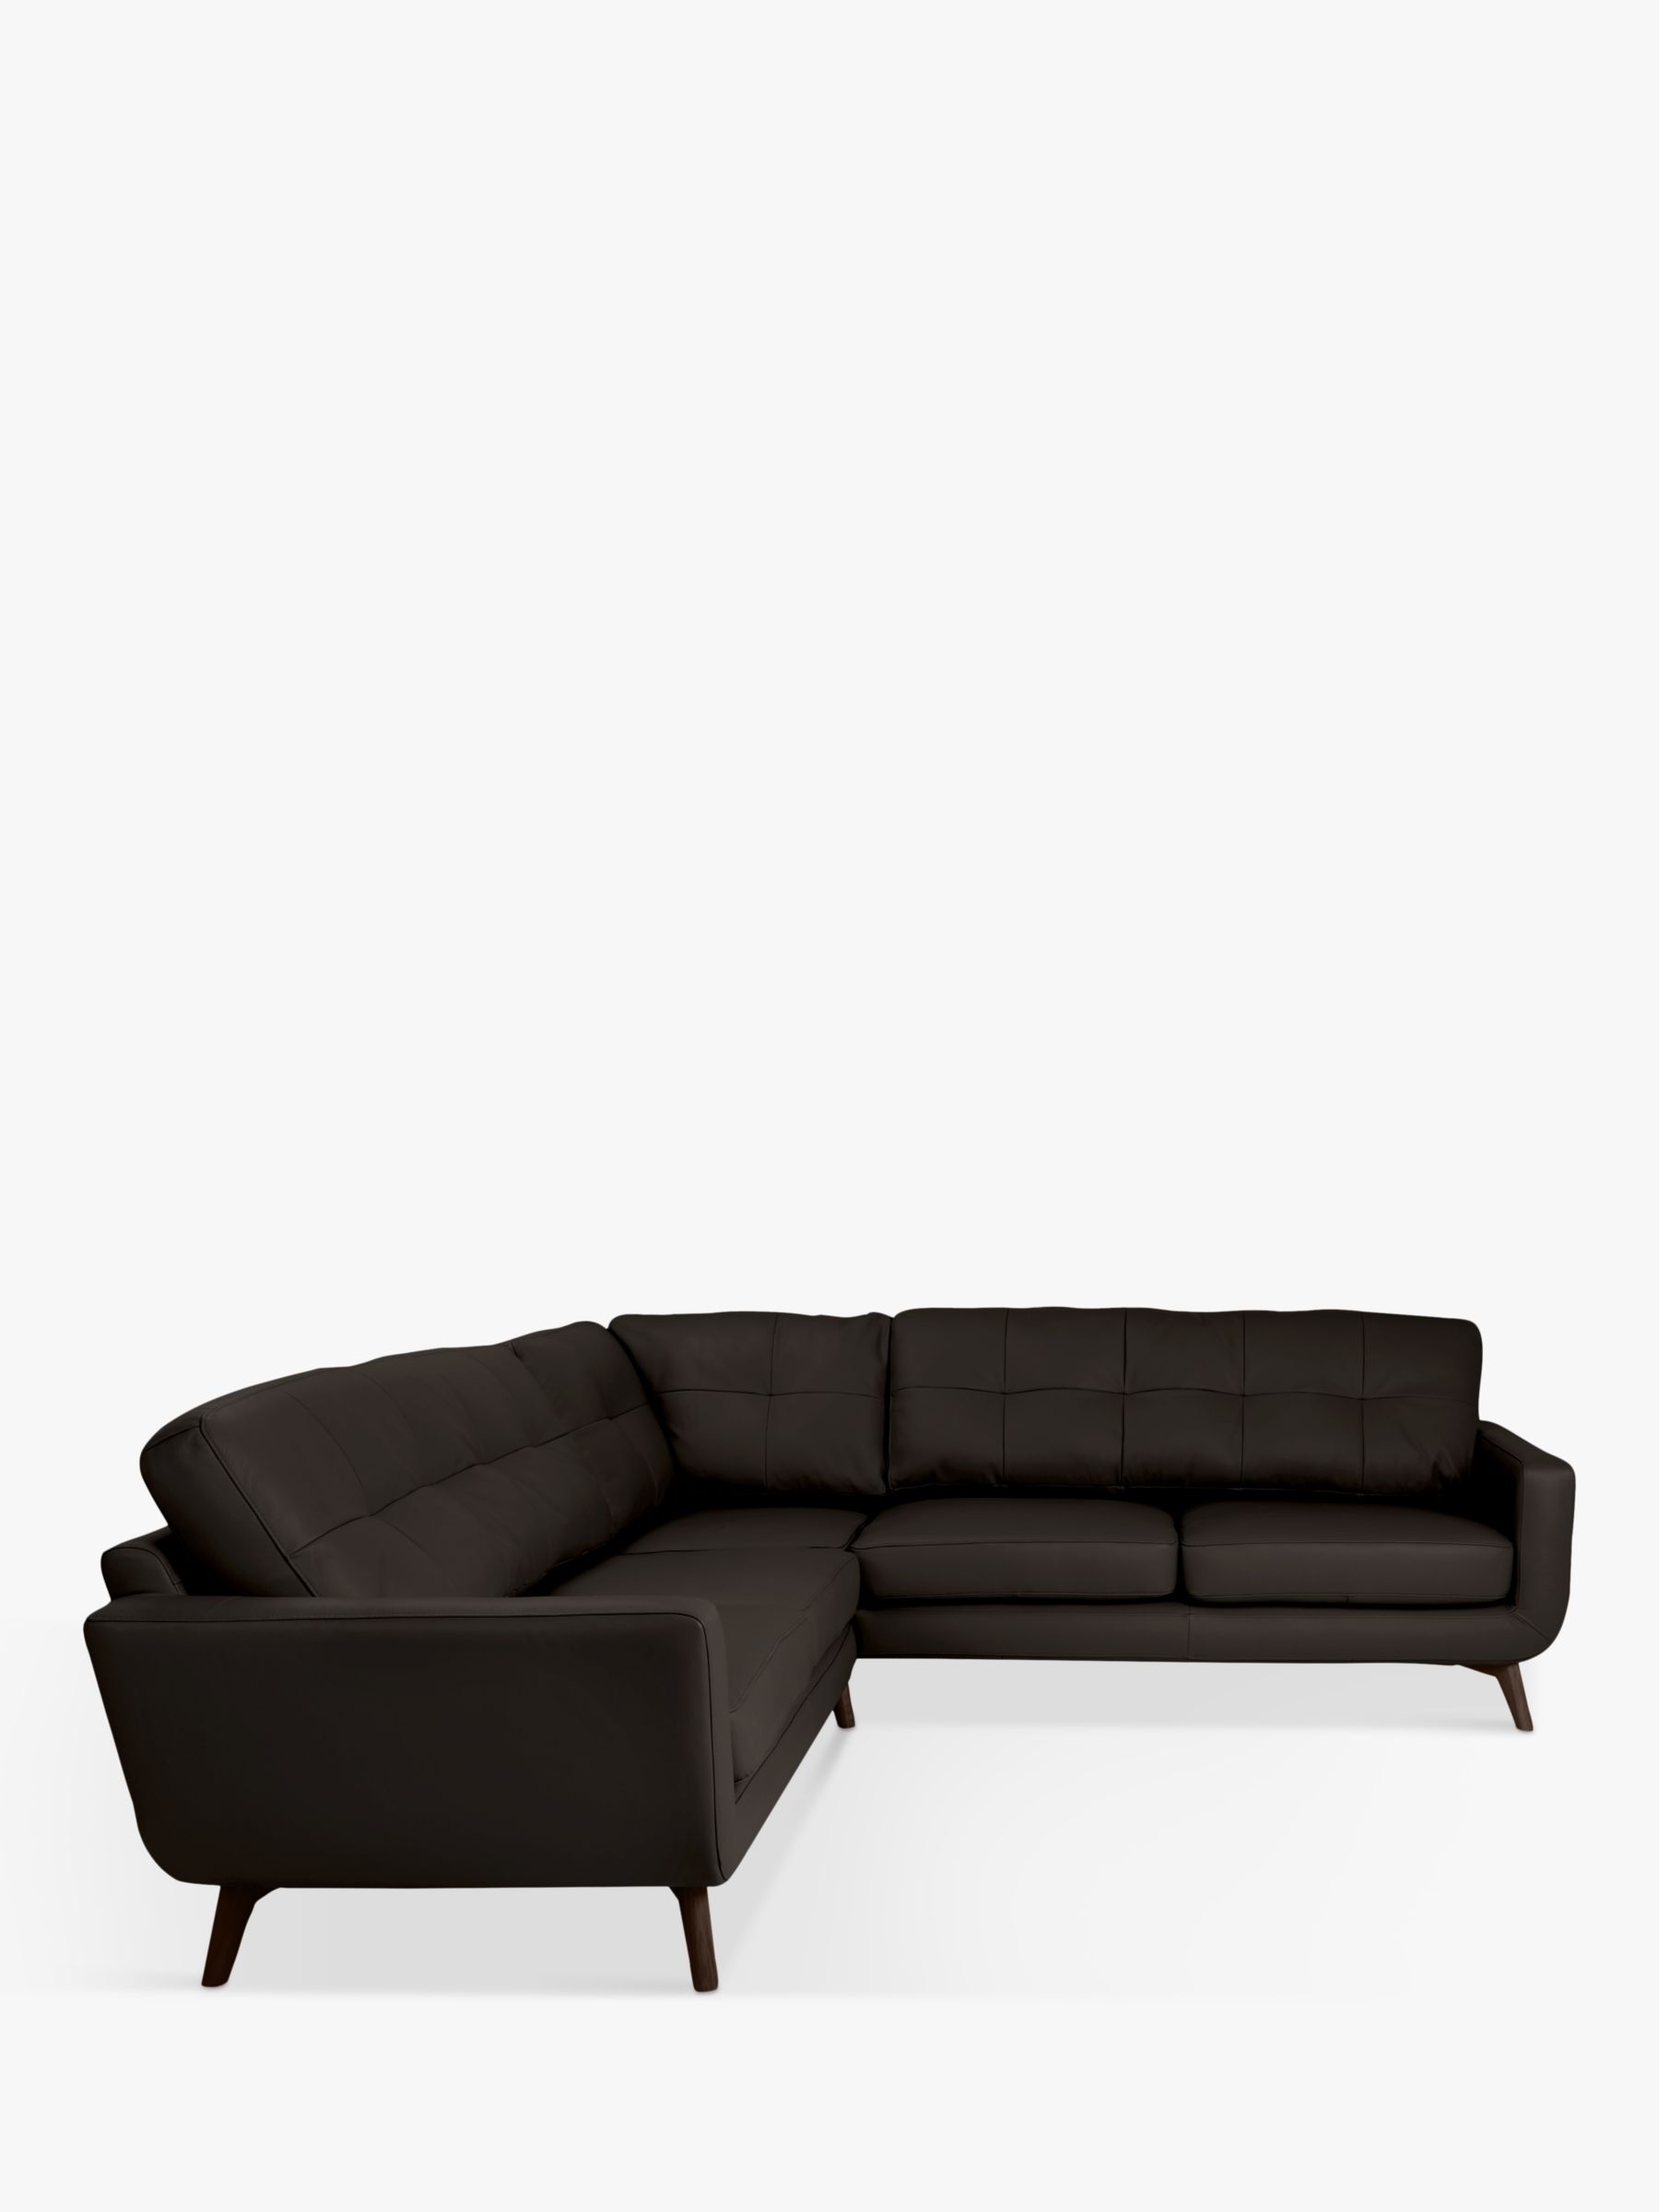 John Lewis Barbican 5+ Seater Leather Corner Sofa, Dark Leg